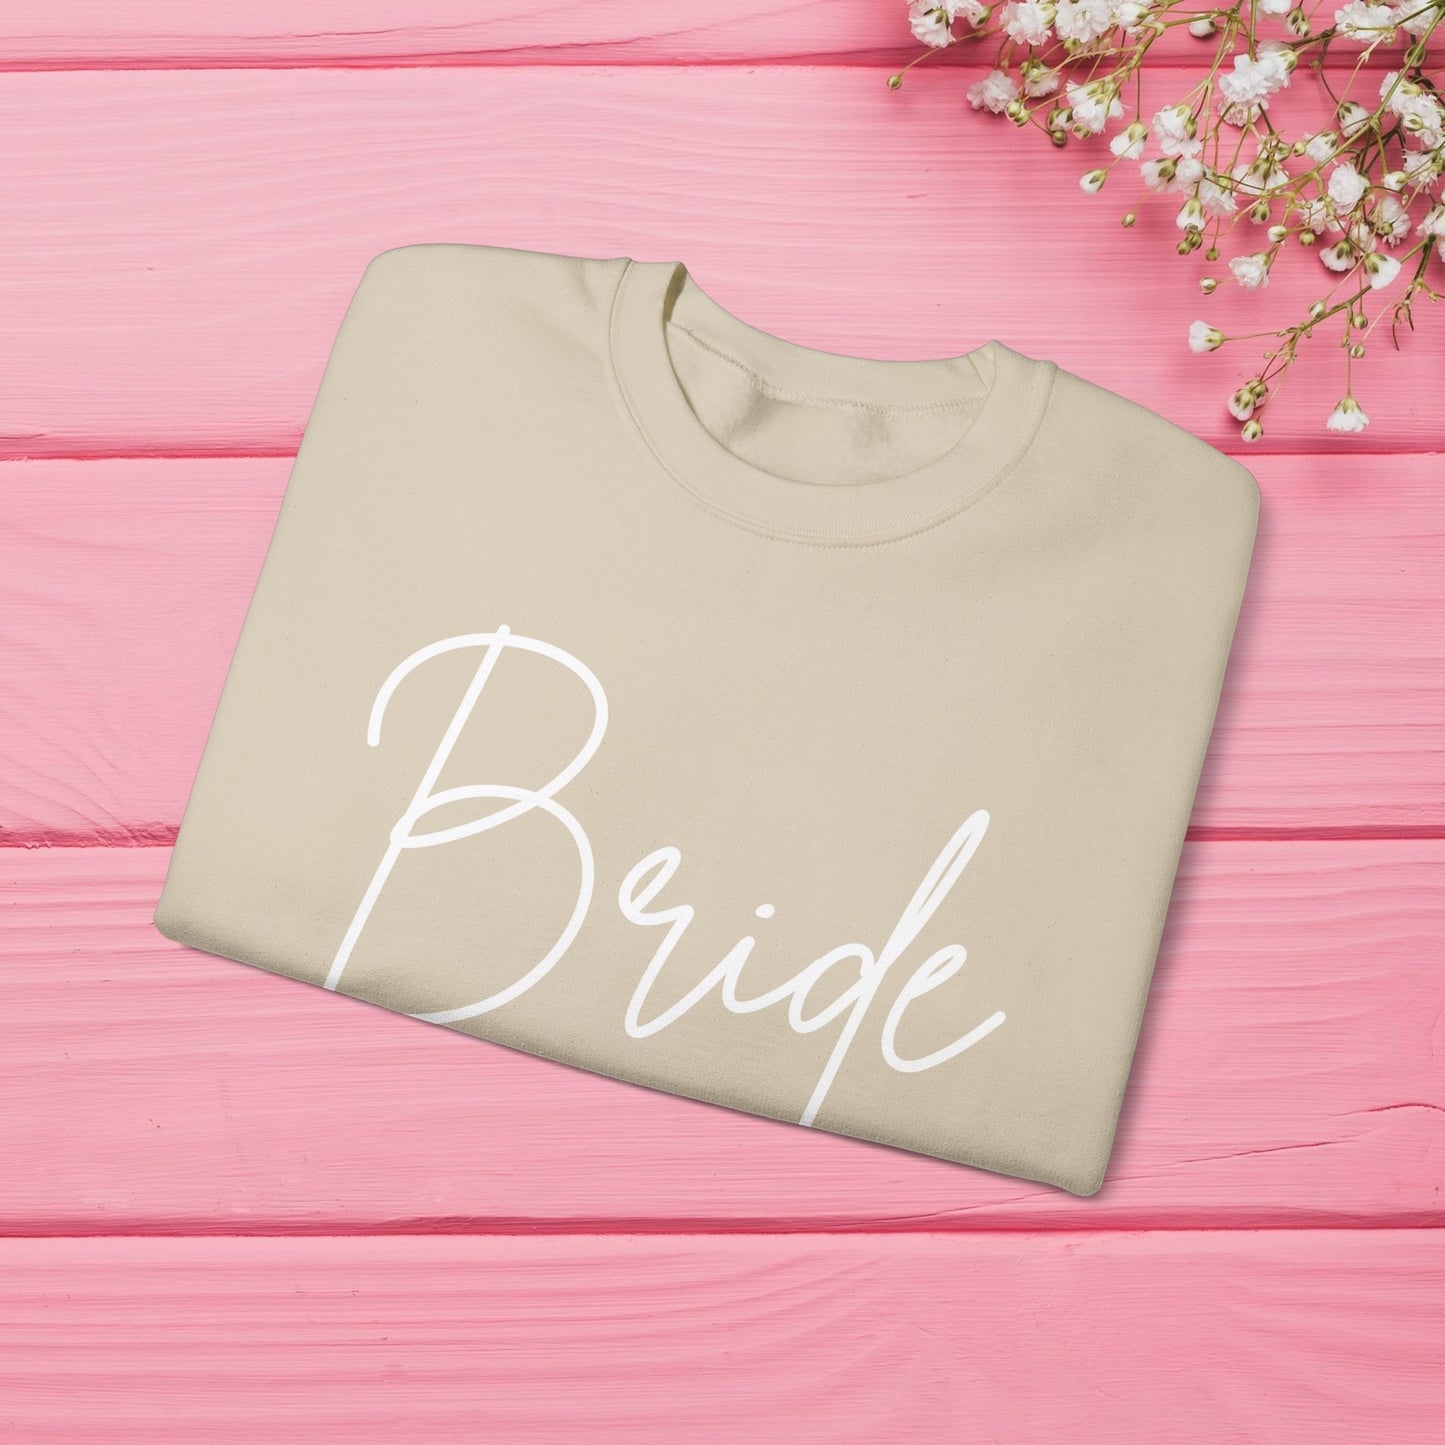 Bride Sweatshirt With Personalized Initials On Left Sleeve Sweatshirt Brides by Emilia Milan 